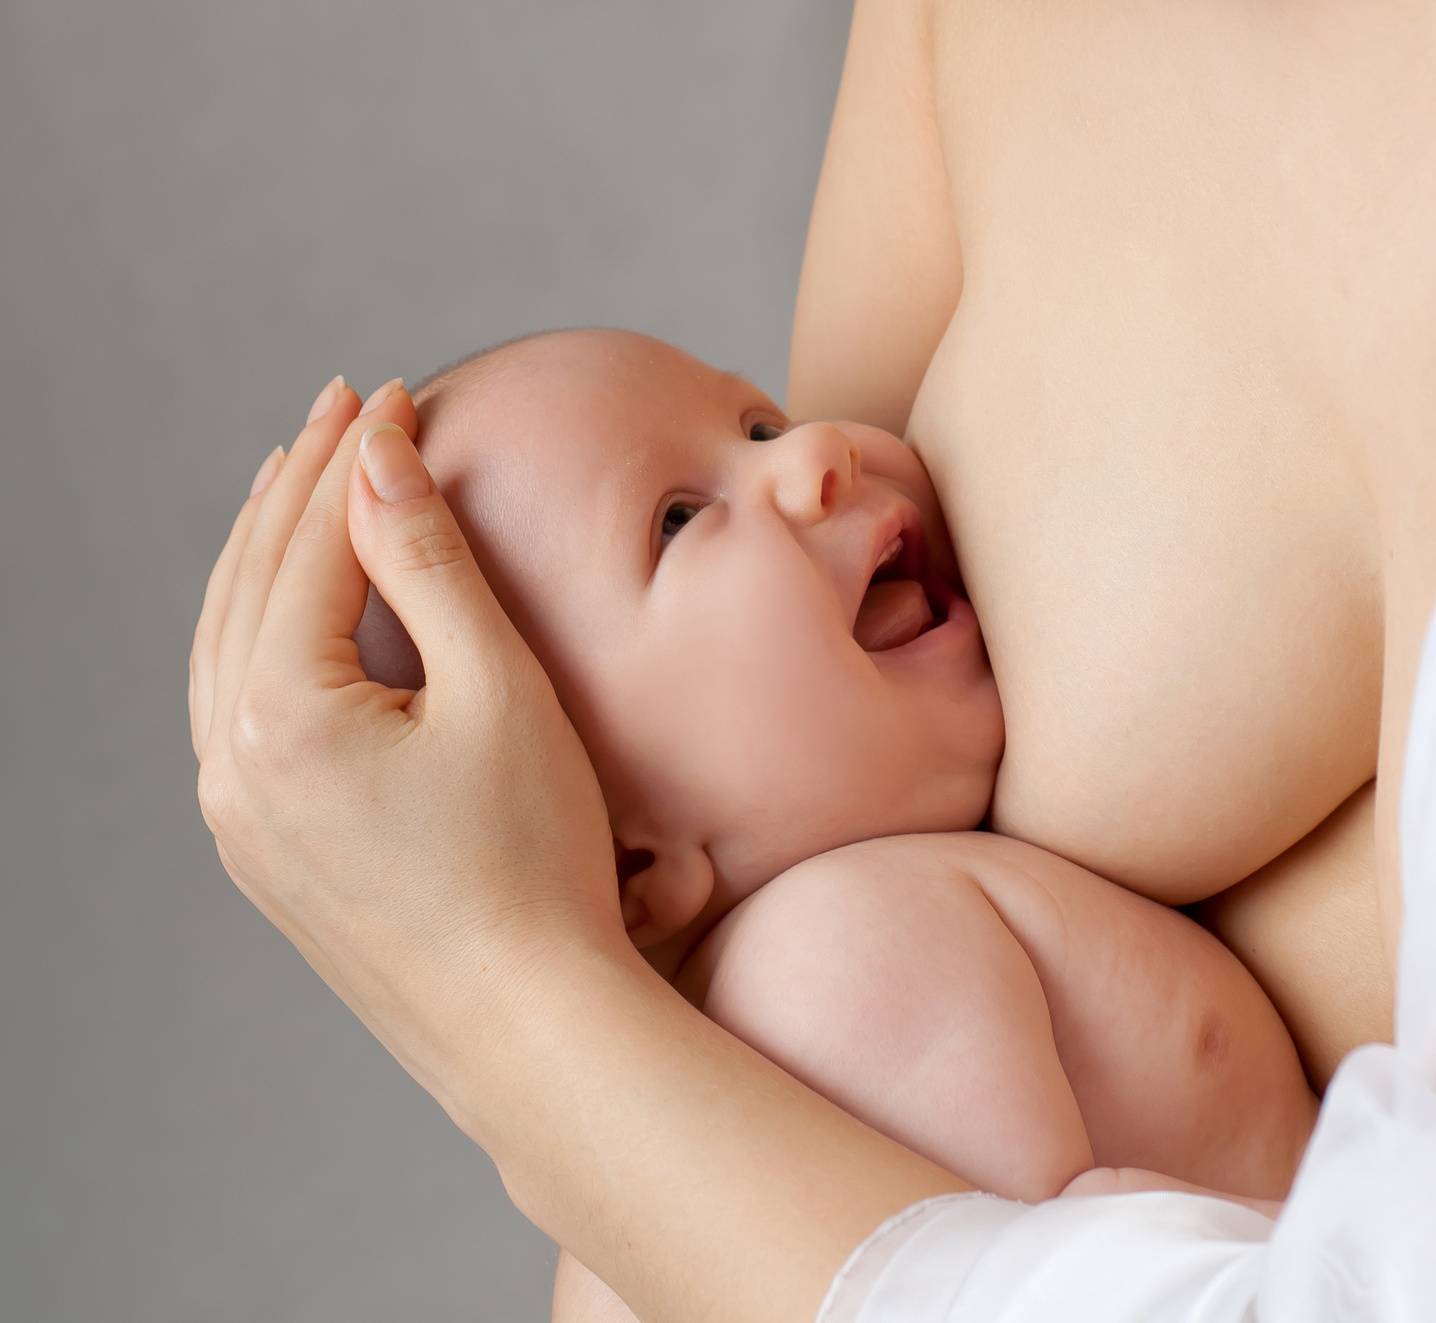 Как приучить ребенка к груди? 4 совета и 12 причин отказа от груди, видео